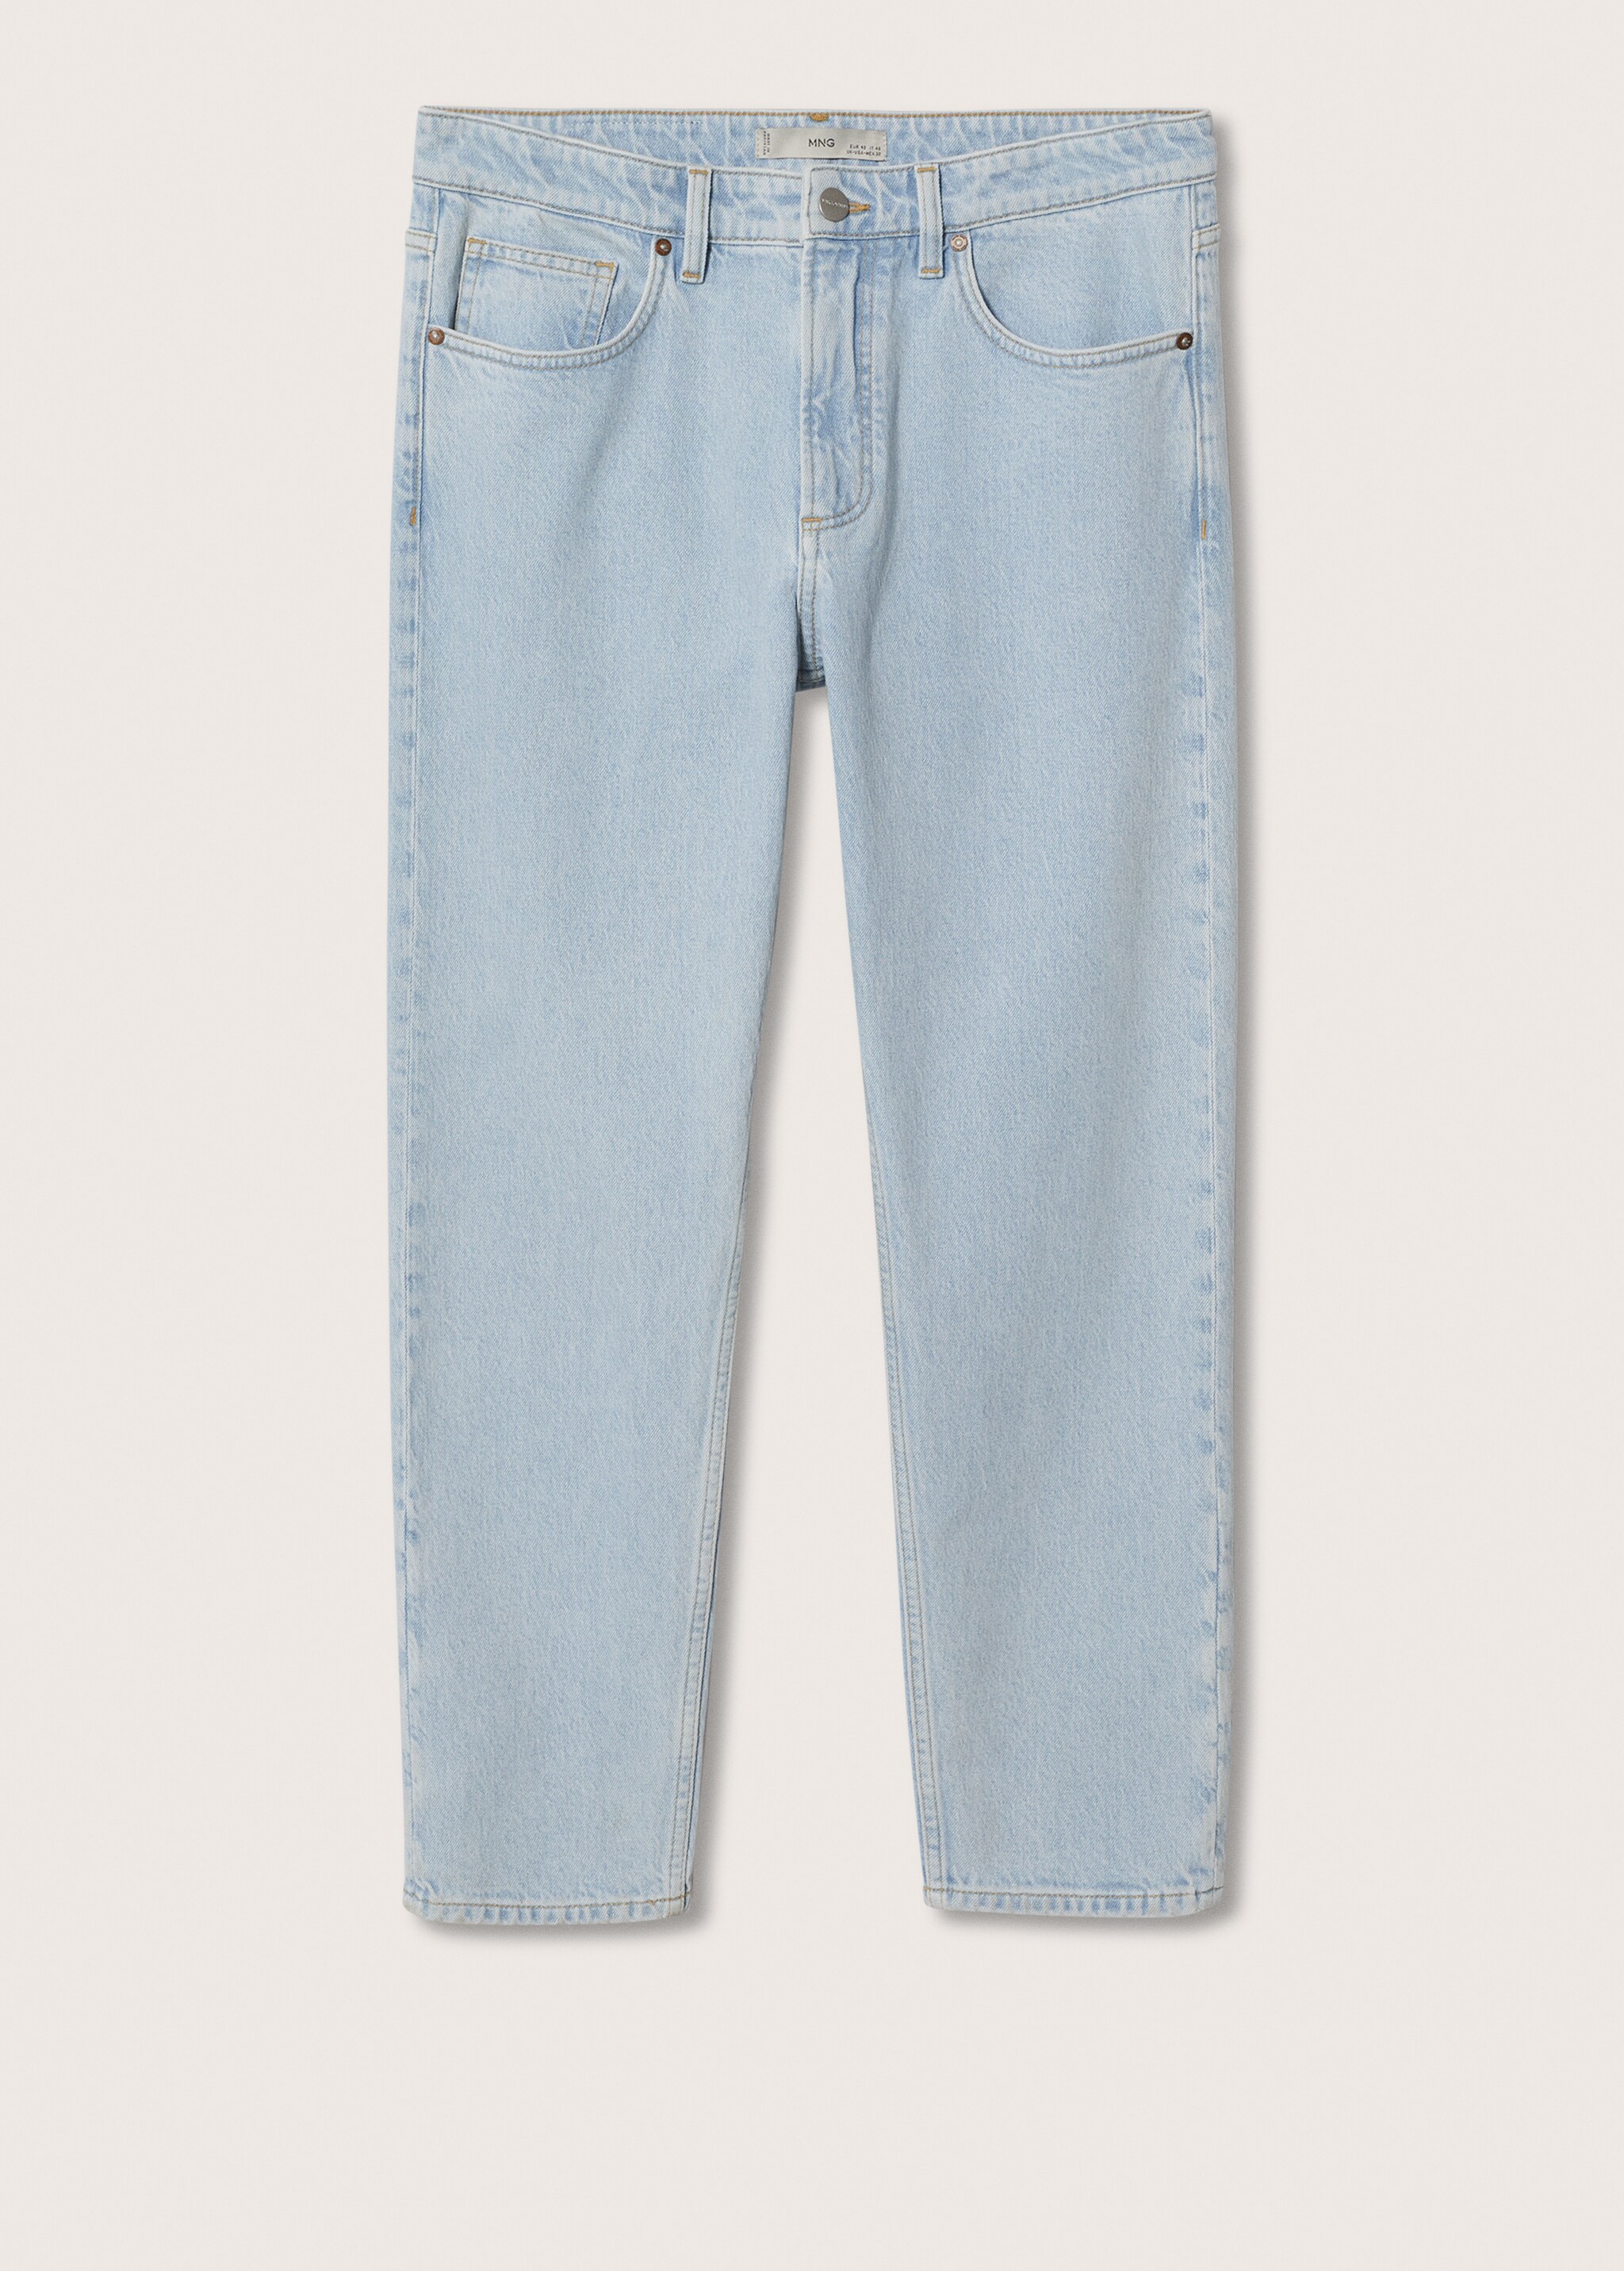 Jeans Ben tapered cropped - Artículo sin modelo